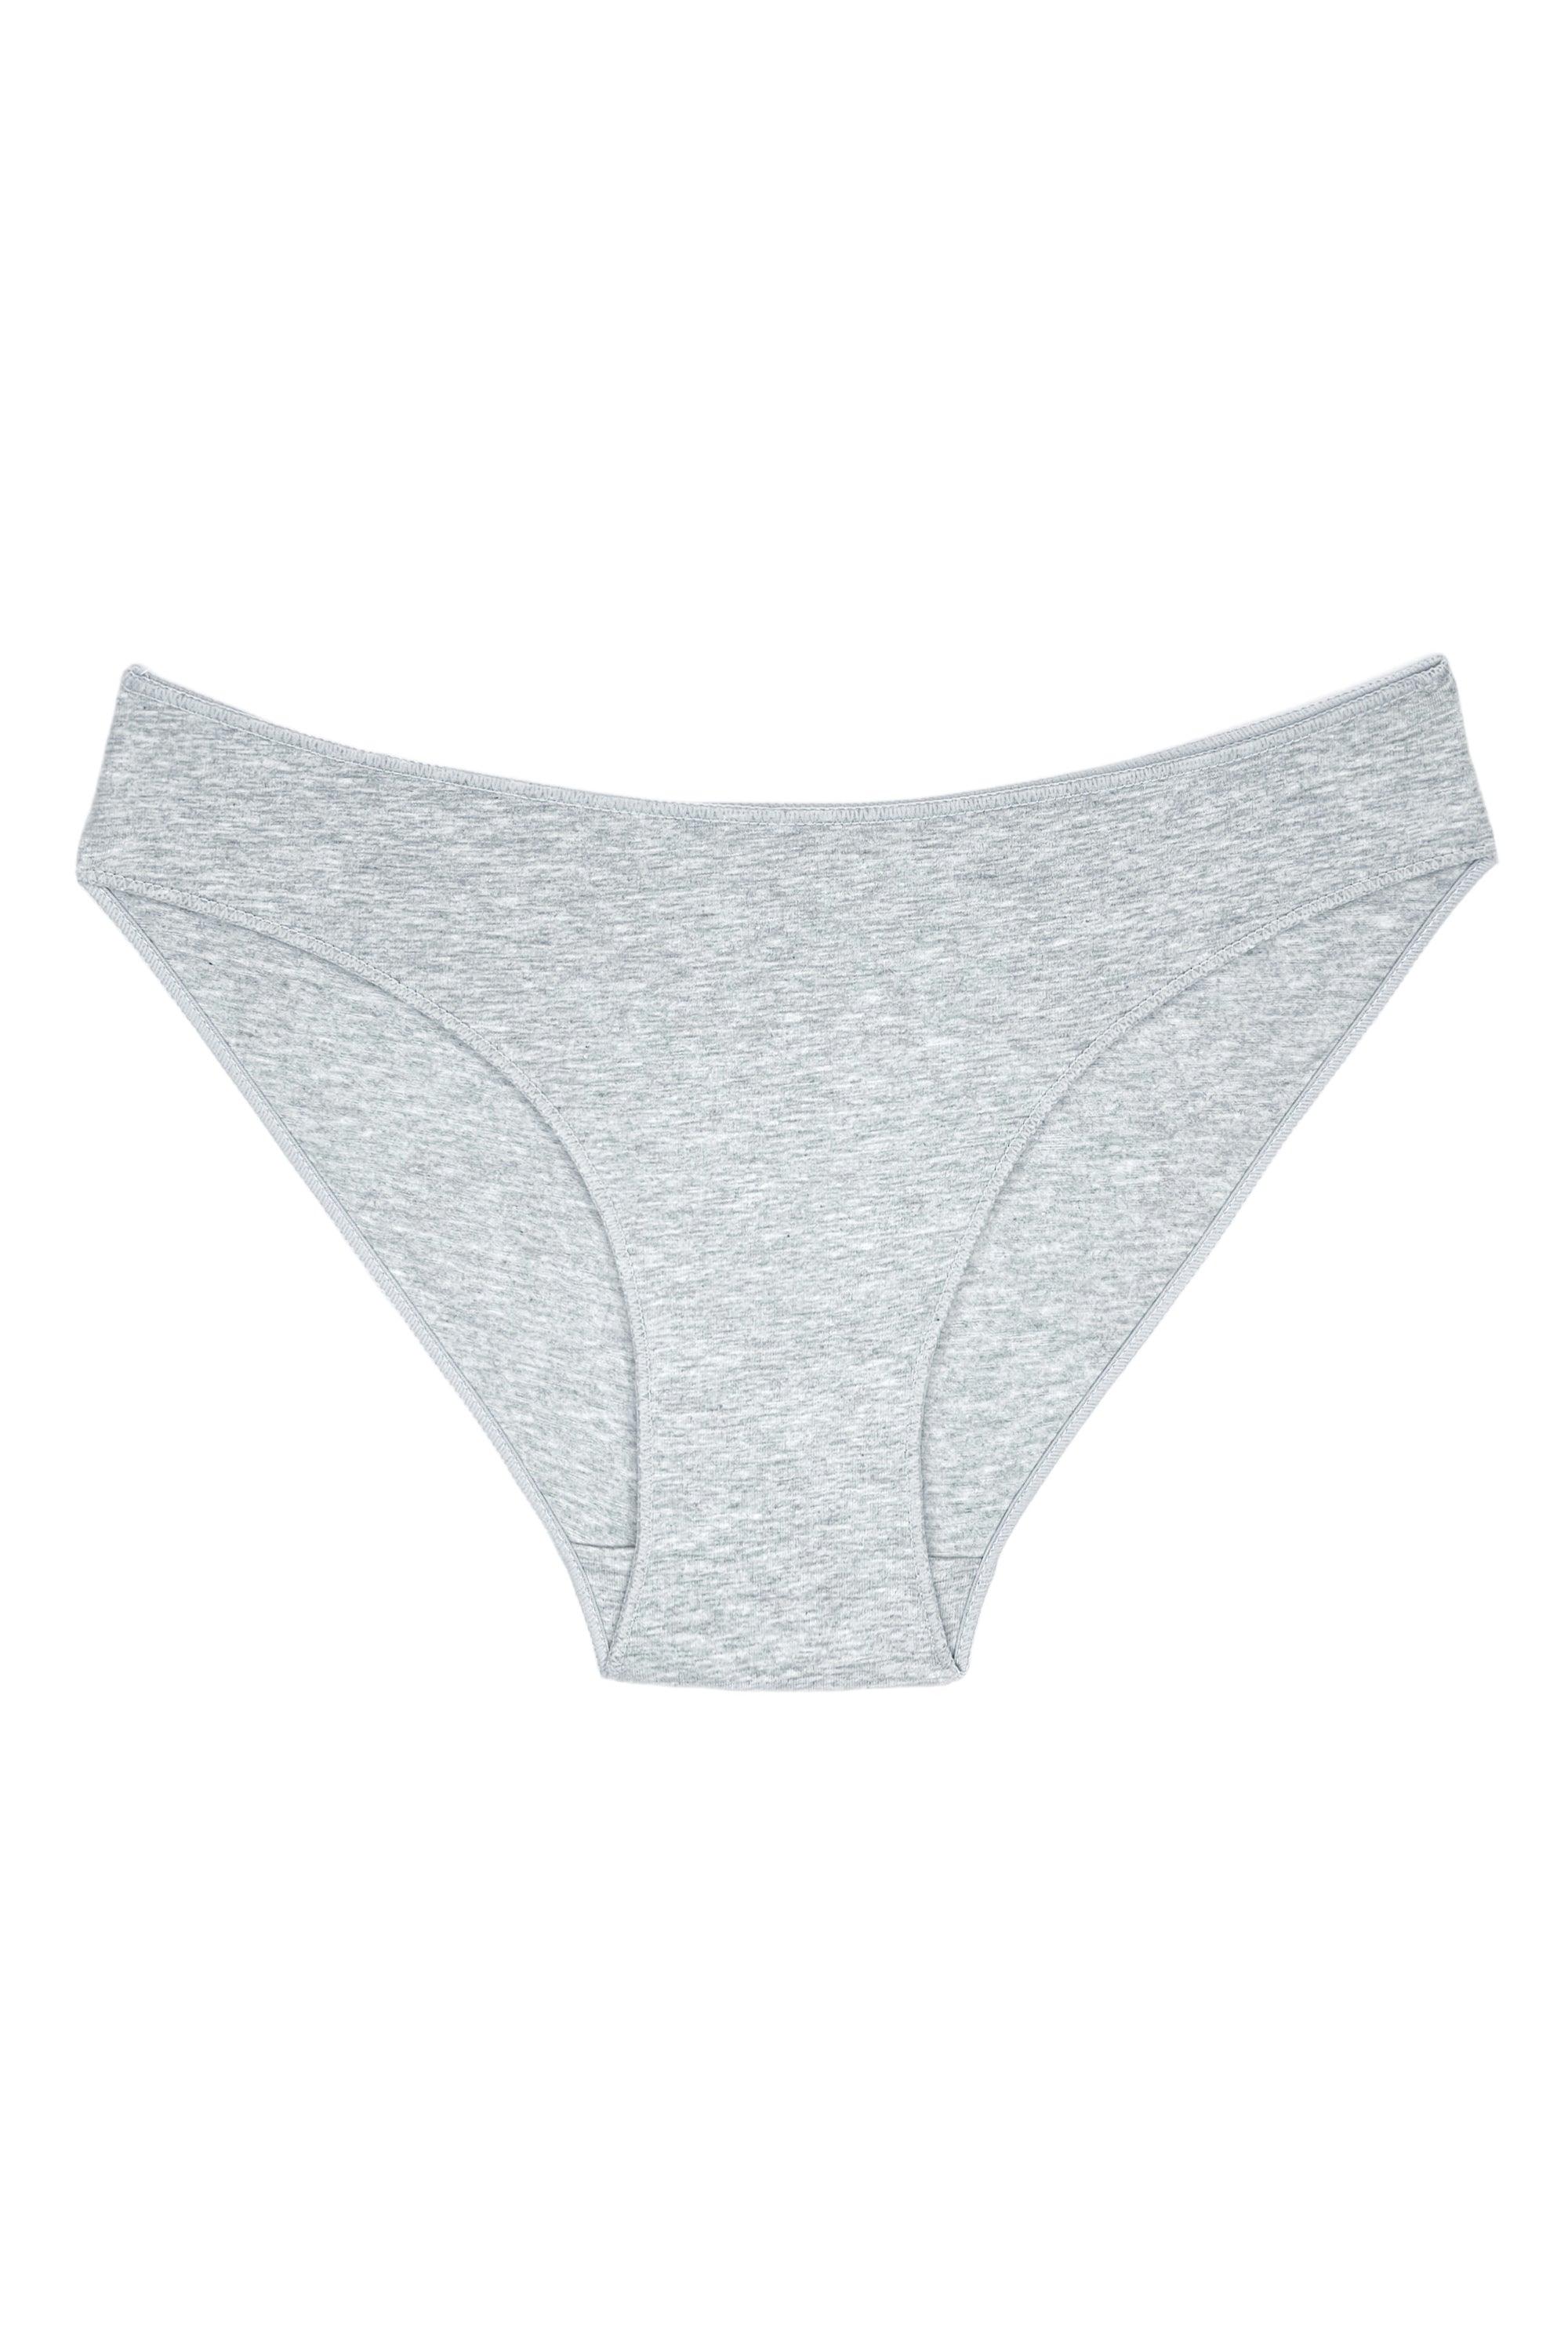 Comfort cotton grey slip panties - yesUndress